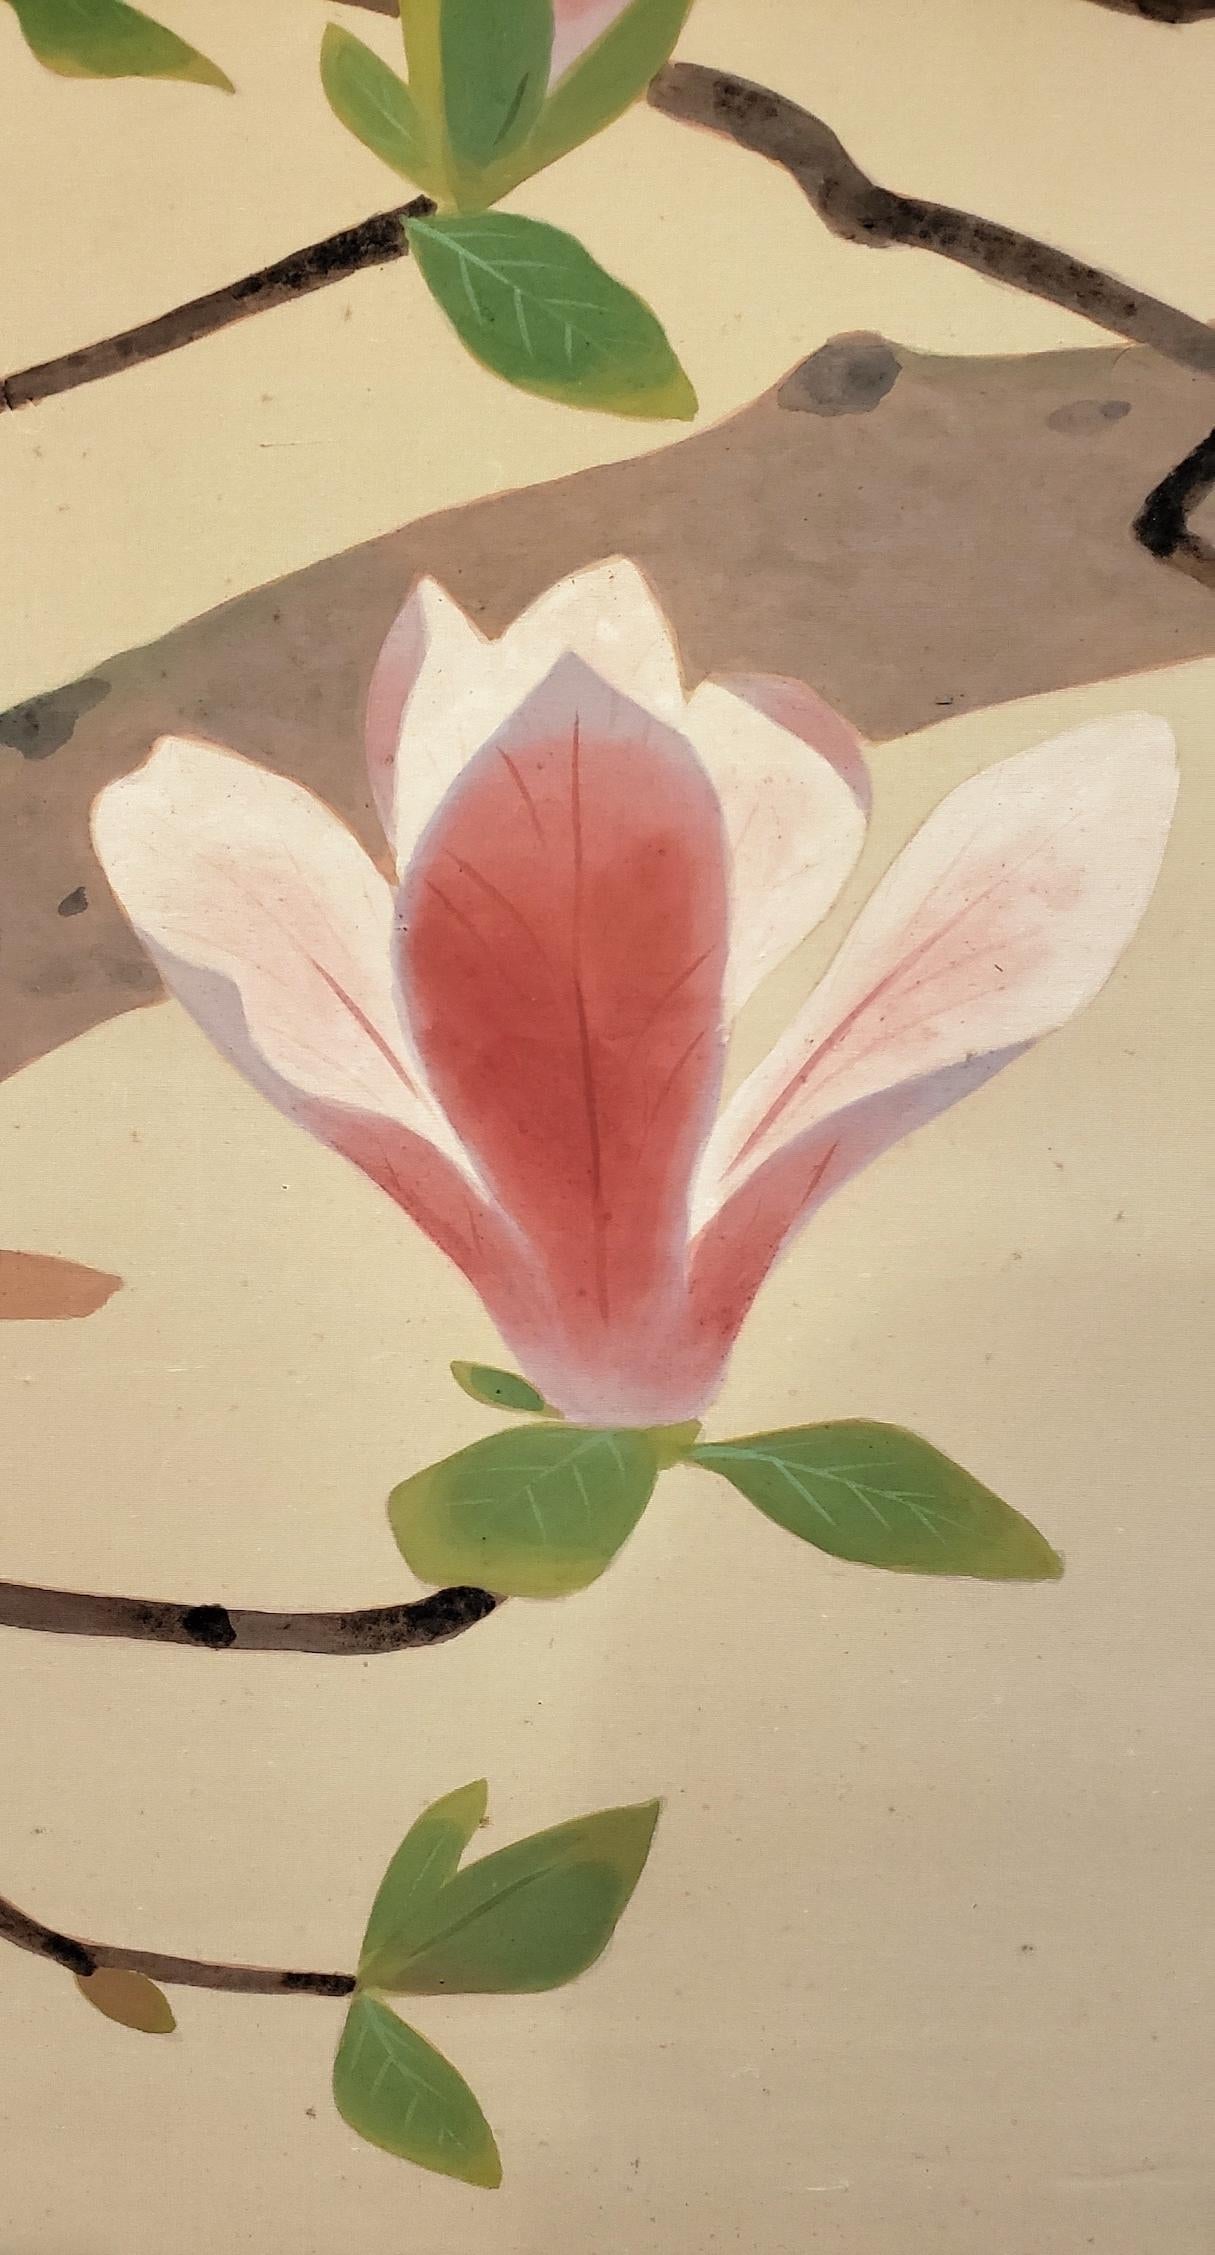 japanese magnolia